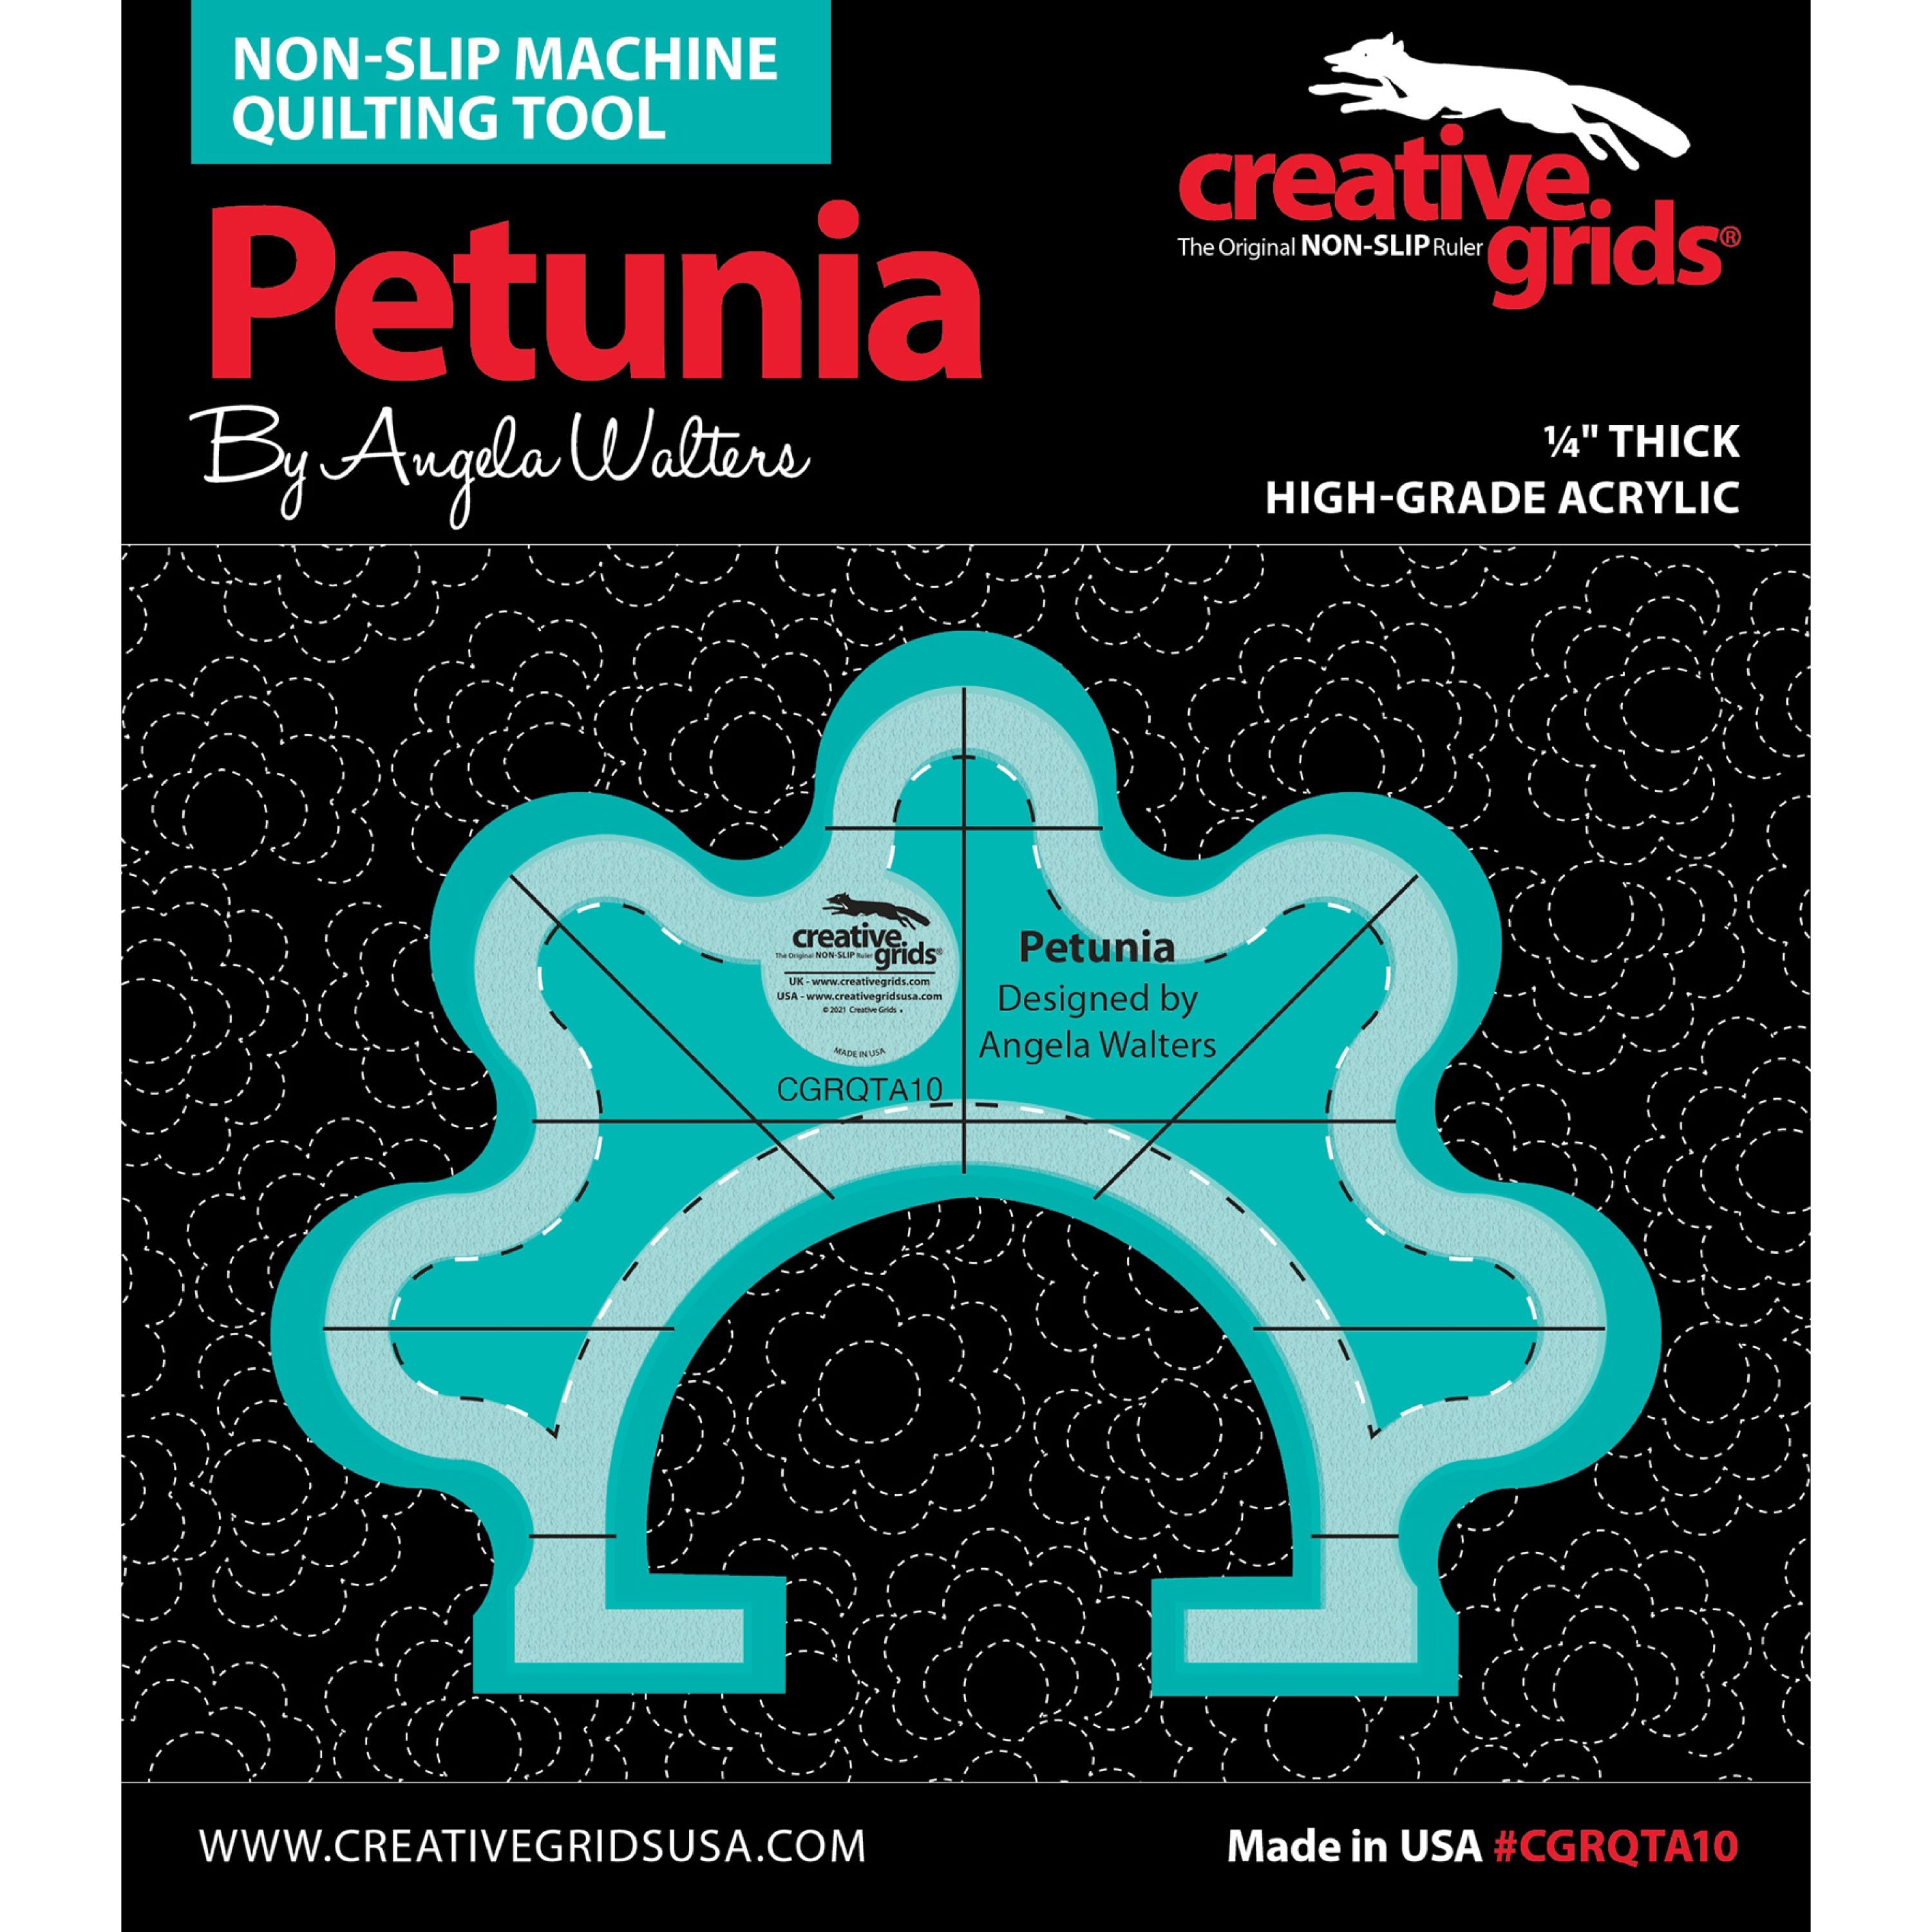 Creative Grids Petunia Machine Quilting Tool CGRQTA10